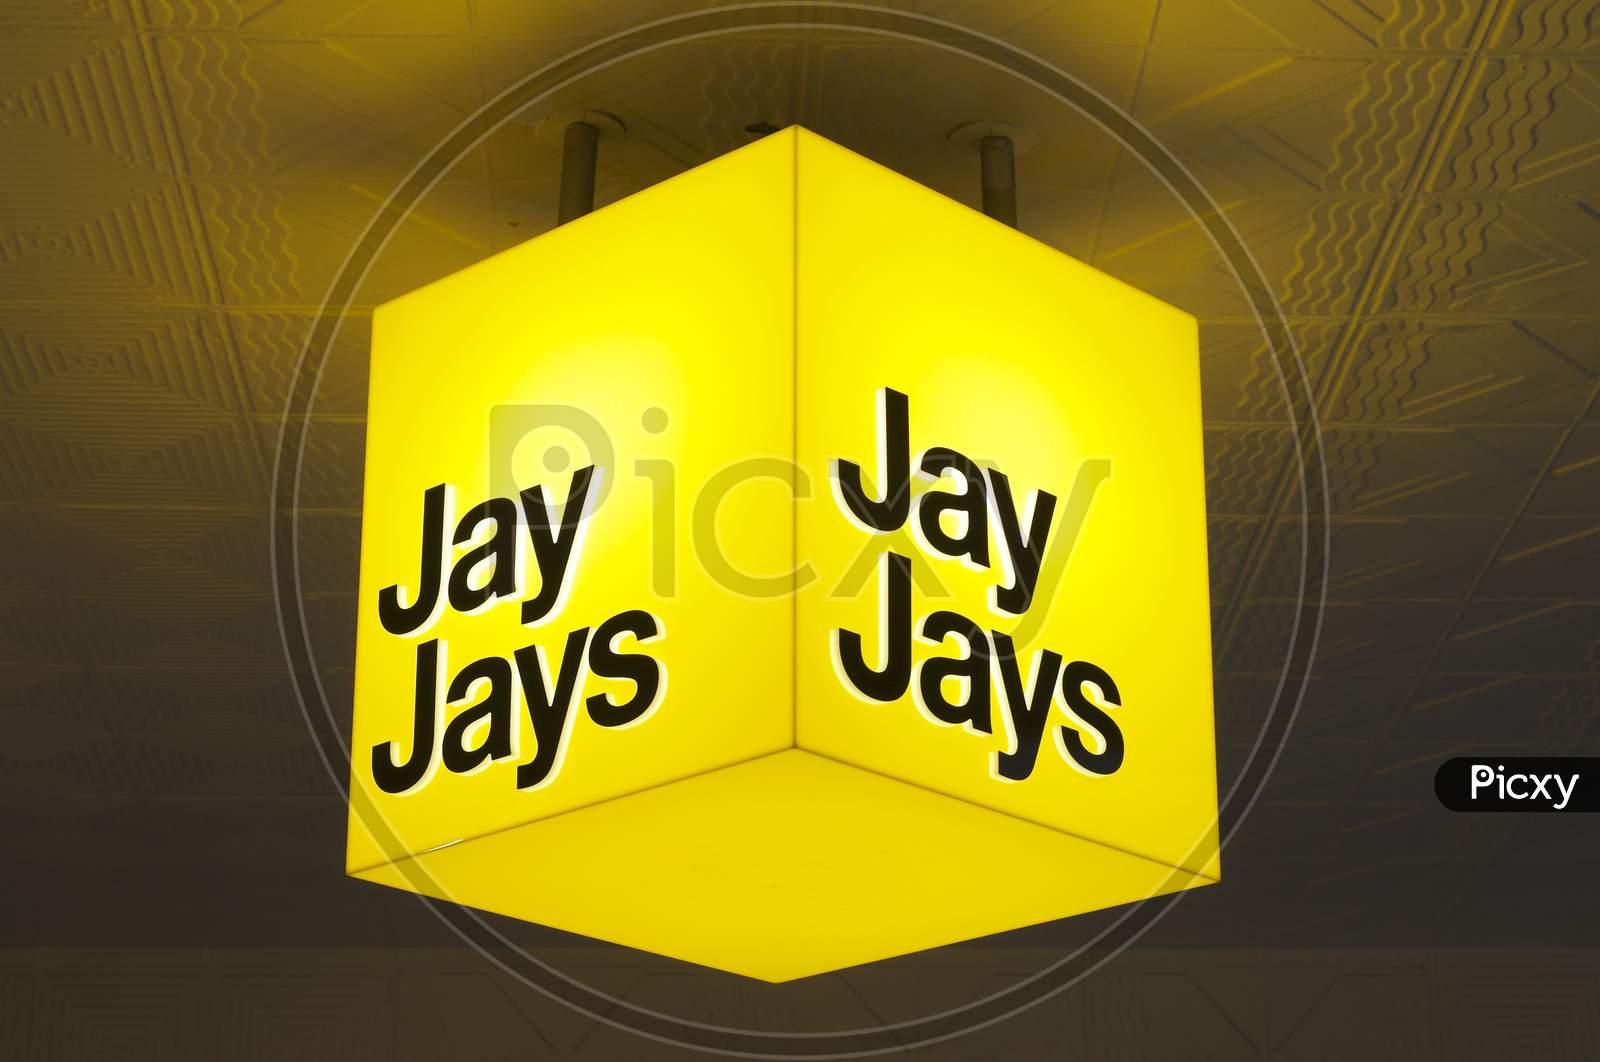 Illuminated Jay Jays Sign